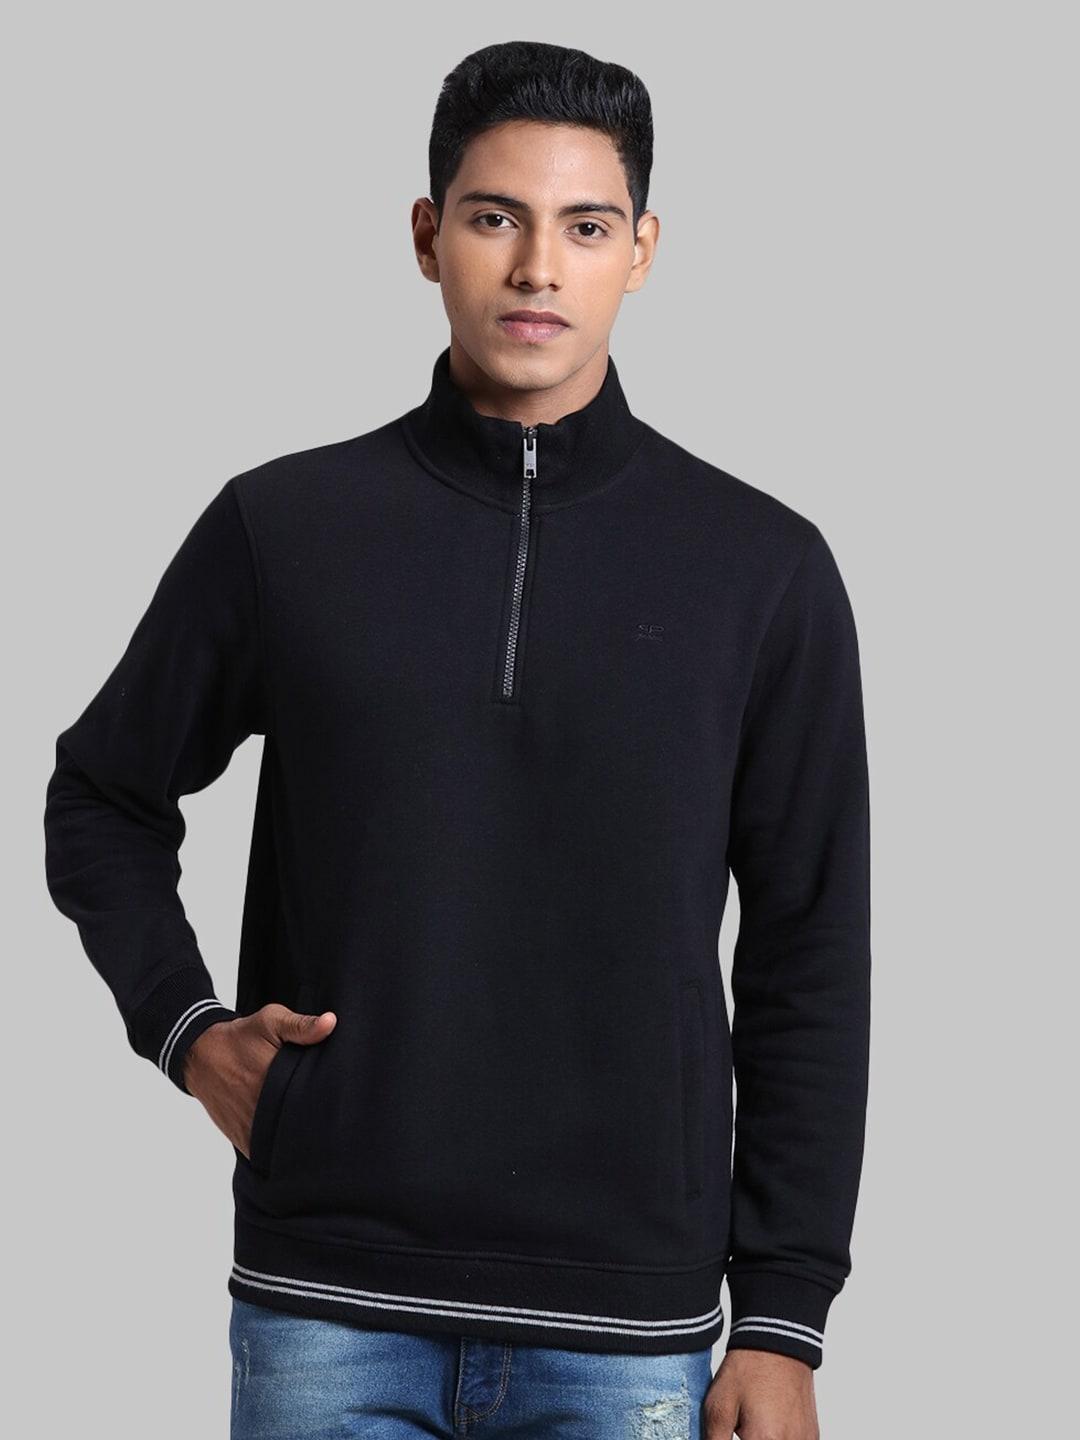 colorplus-men-black-solid-sweatshirt